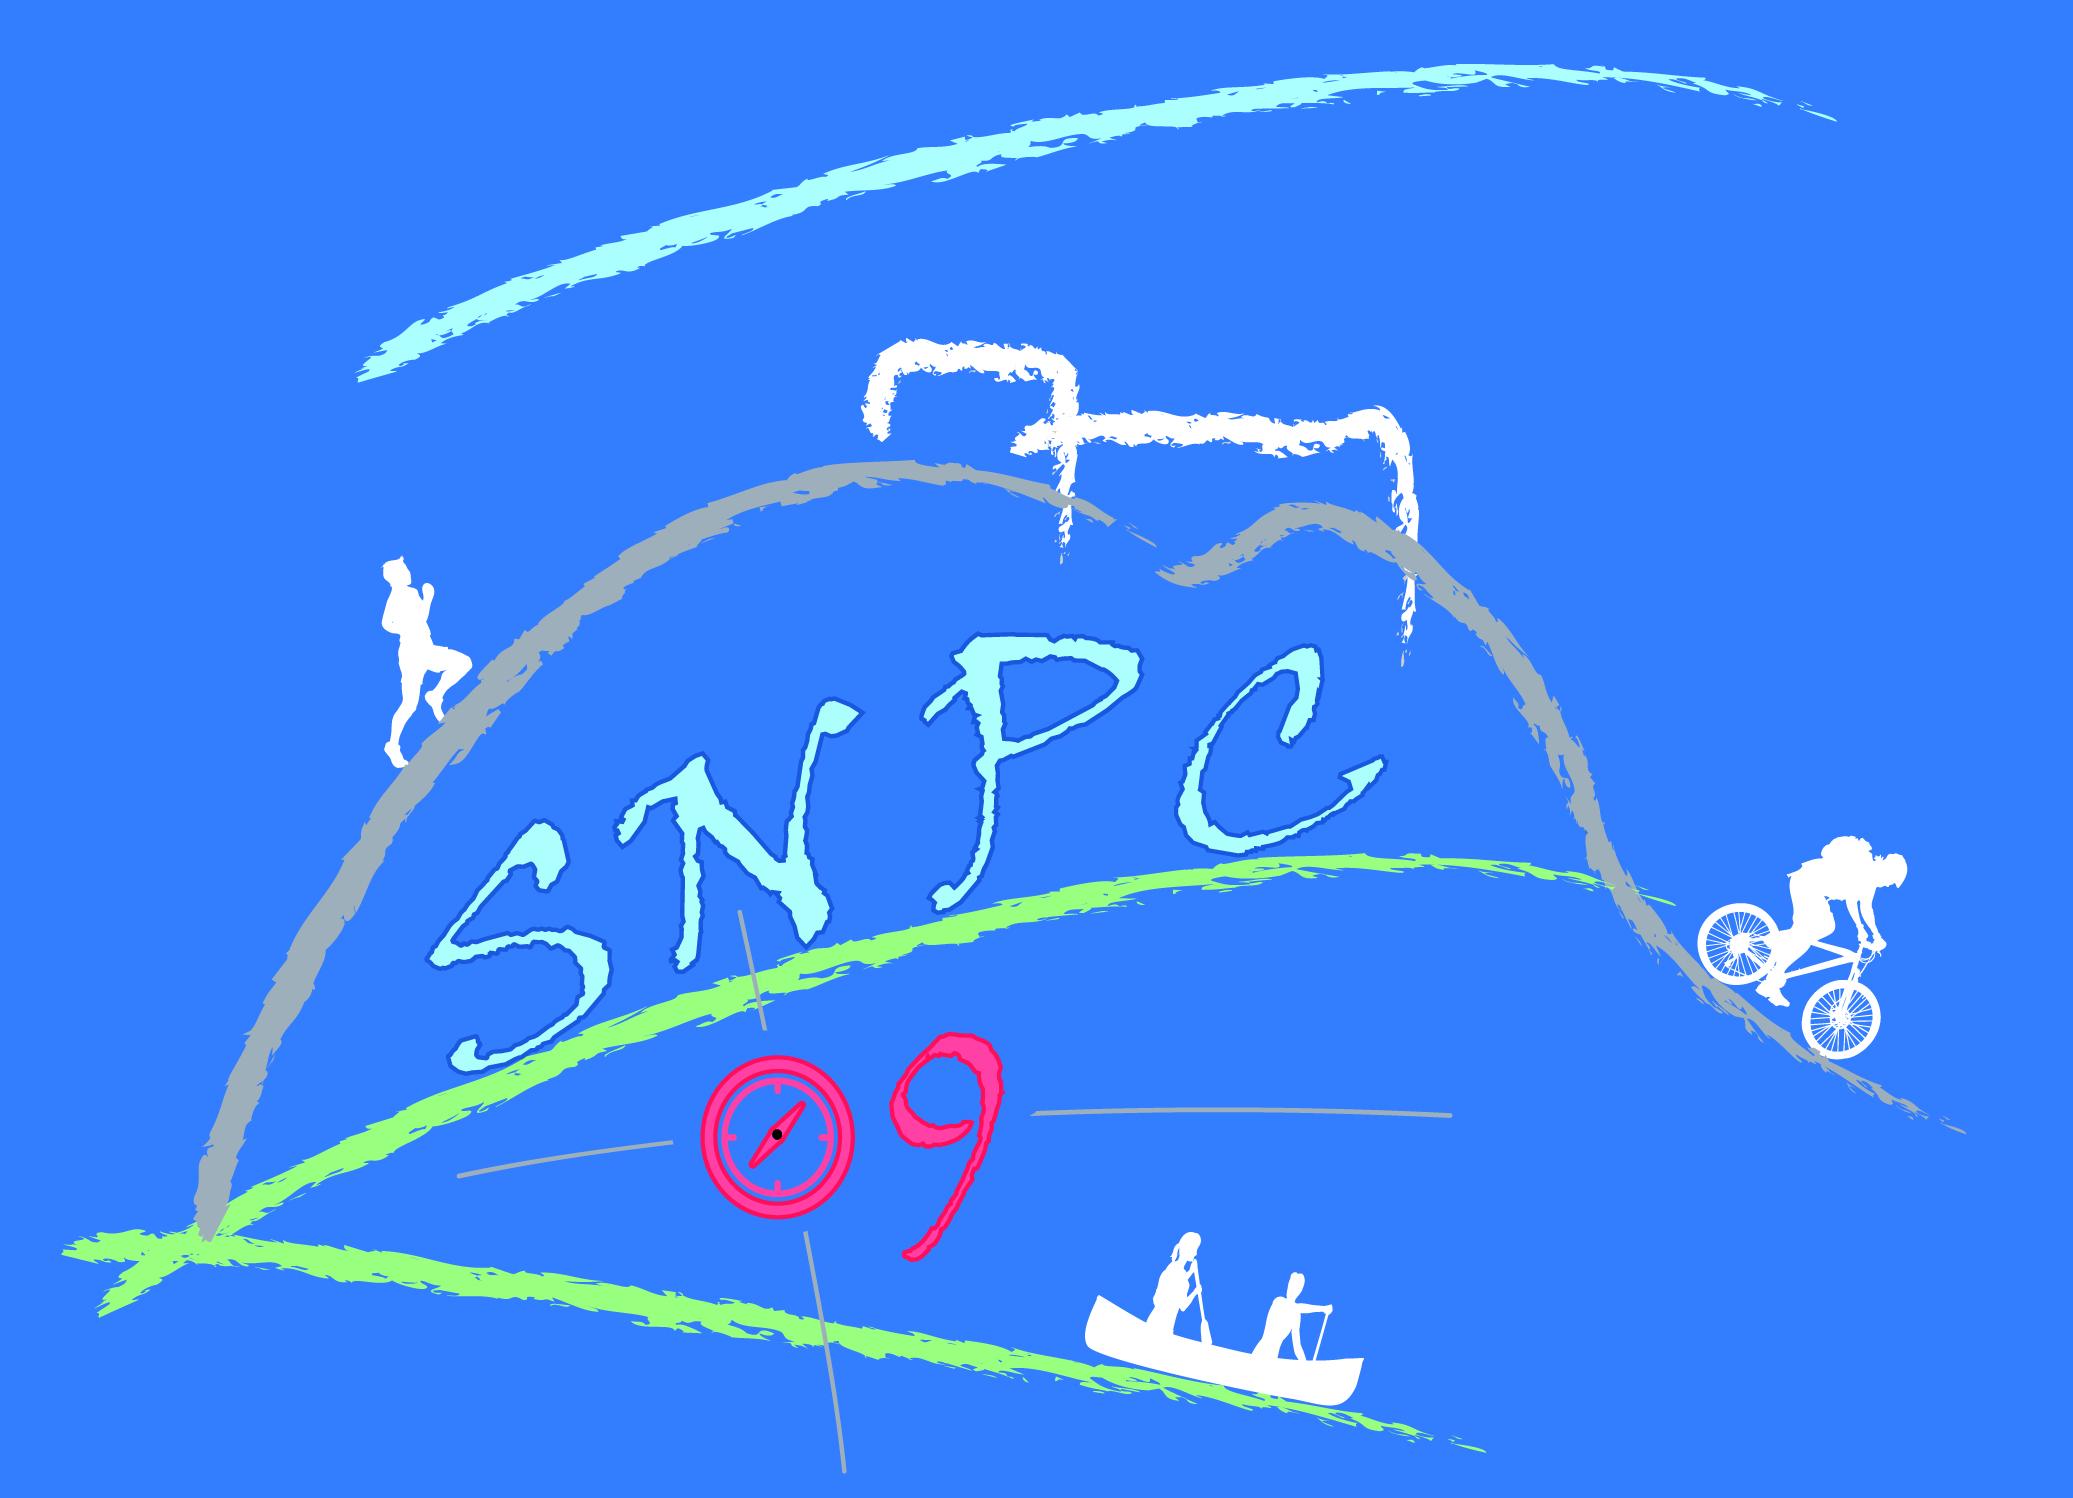 SNPC09.jpg